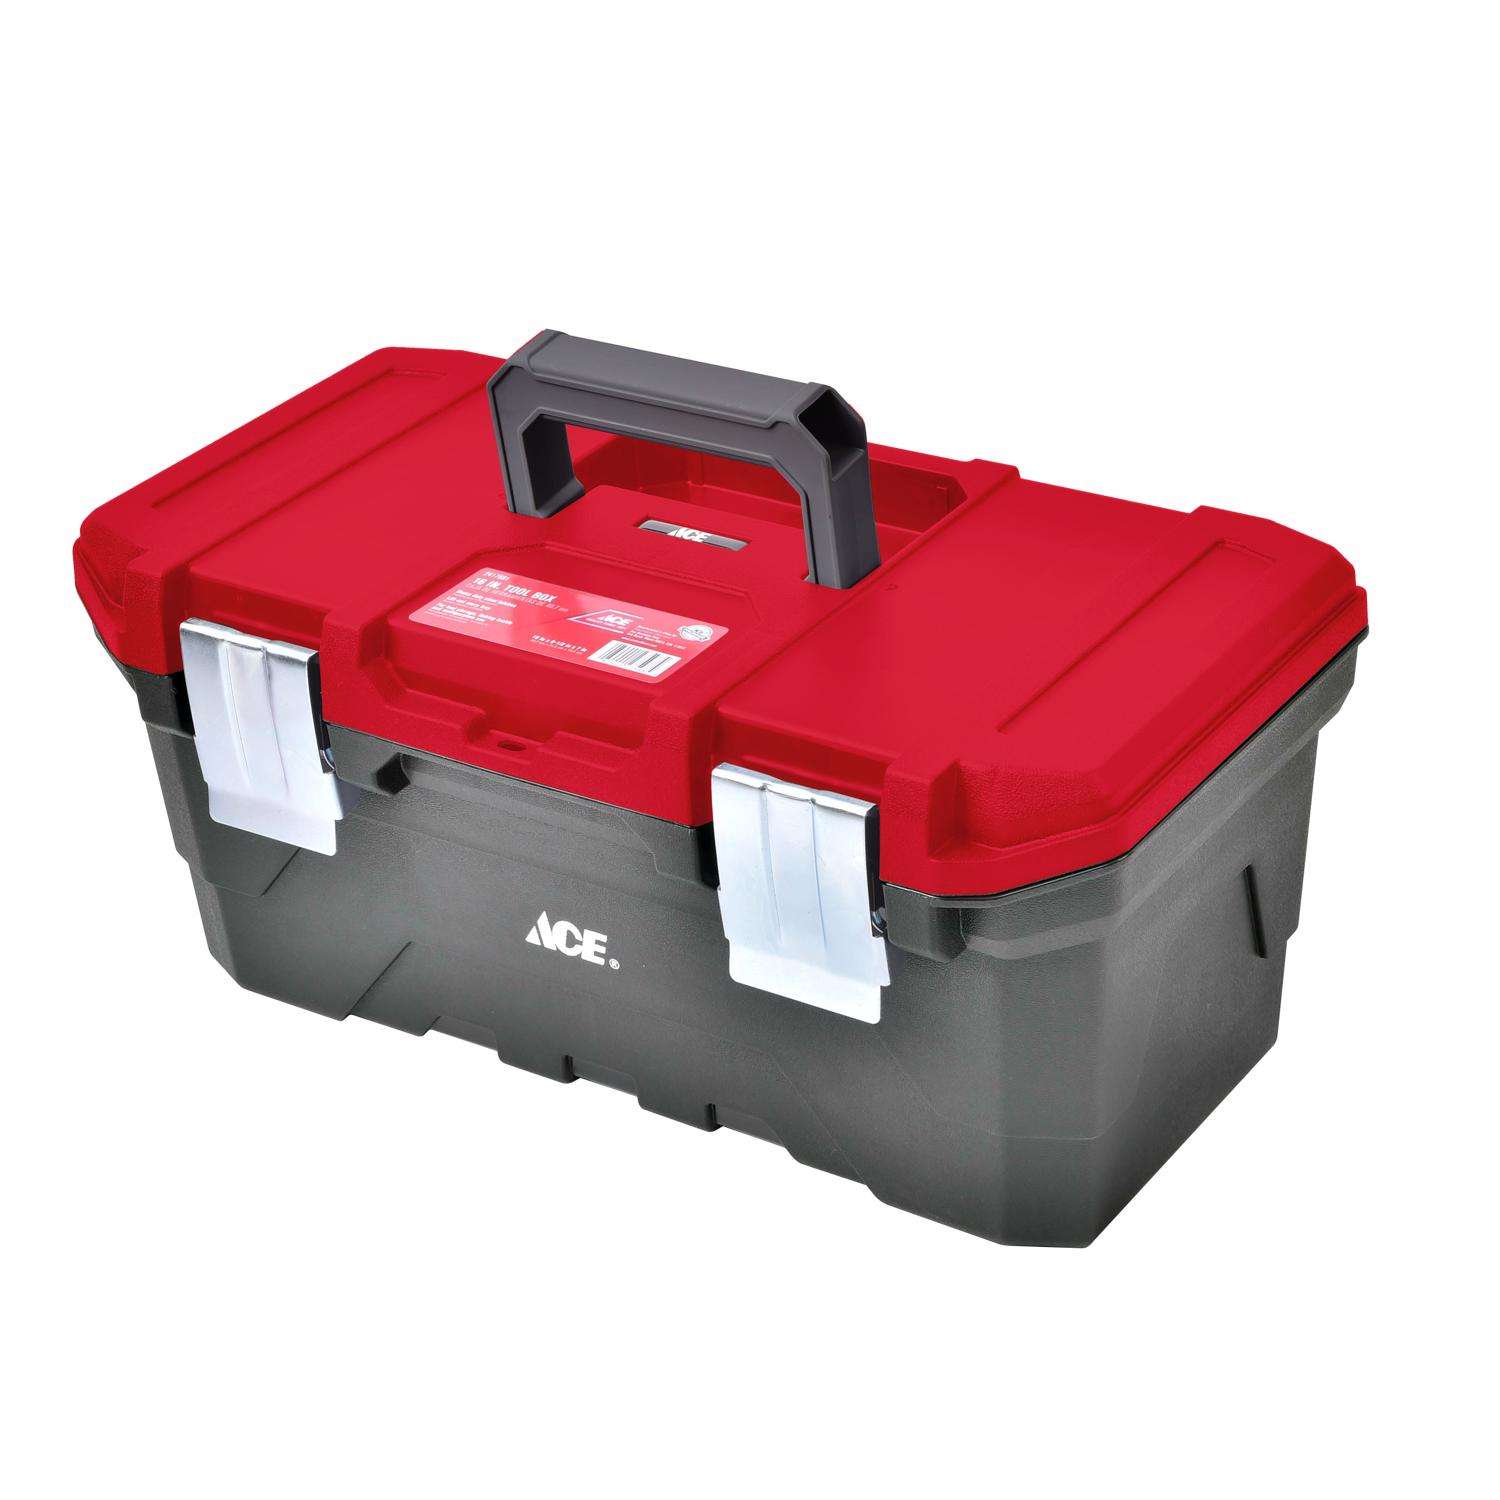 Ace 16 Tool Box